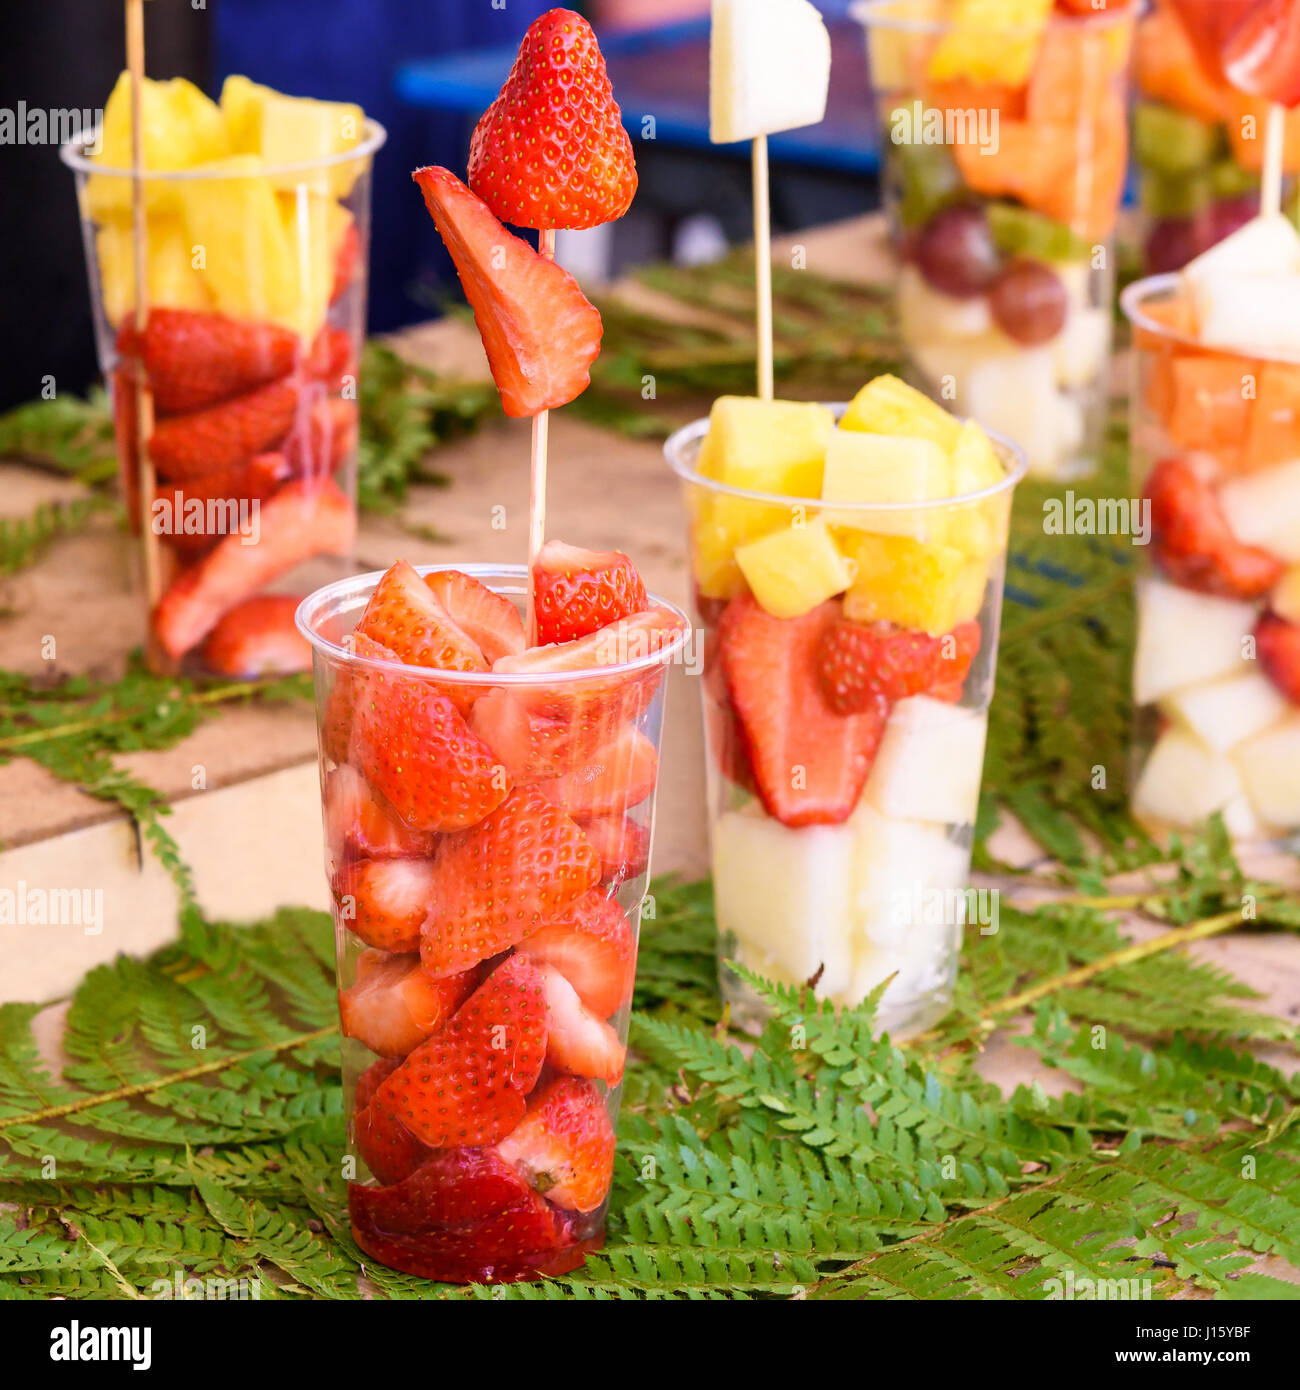 Fruit salad in plastic cups Stock Photo